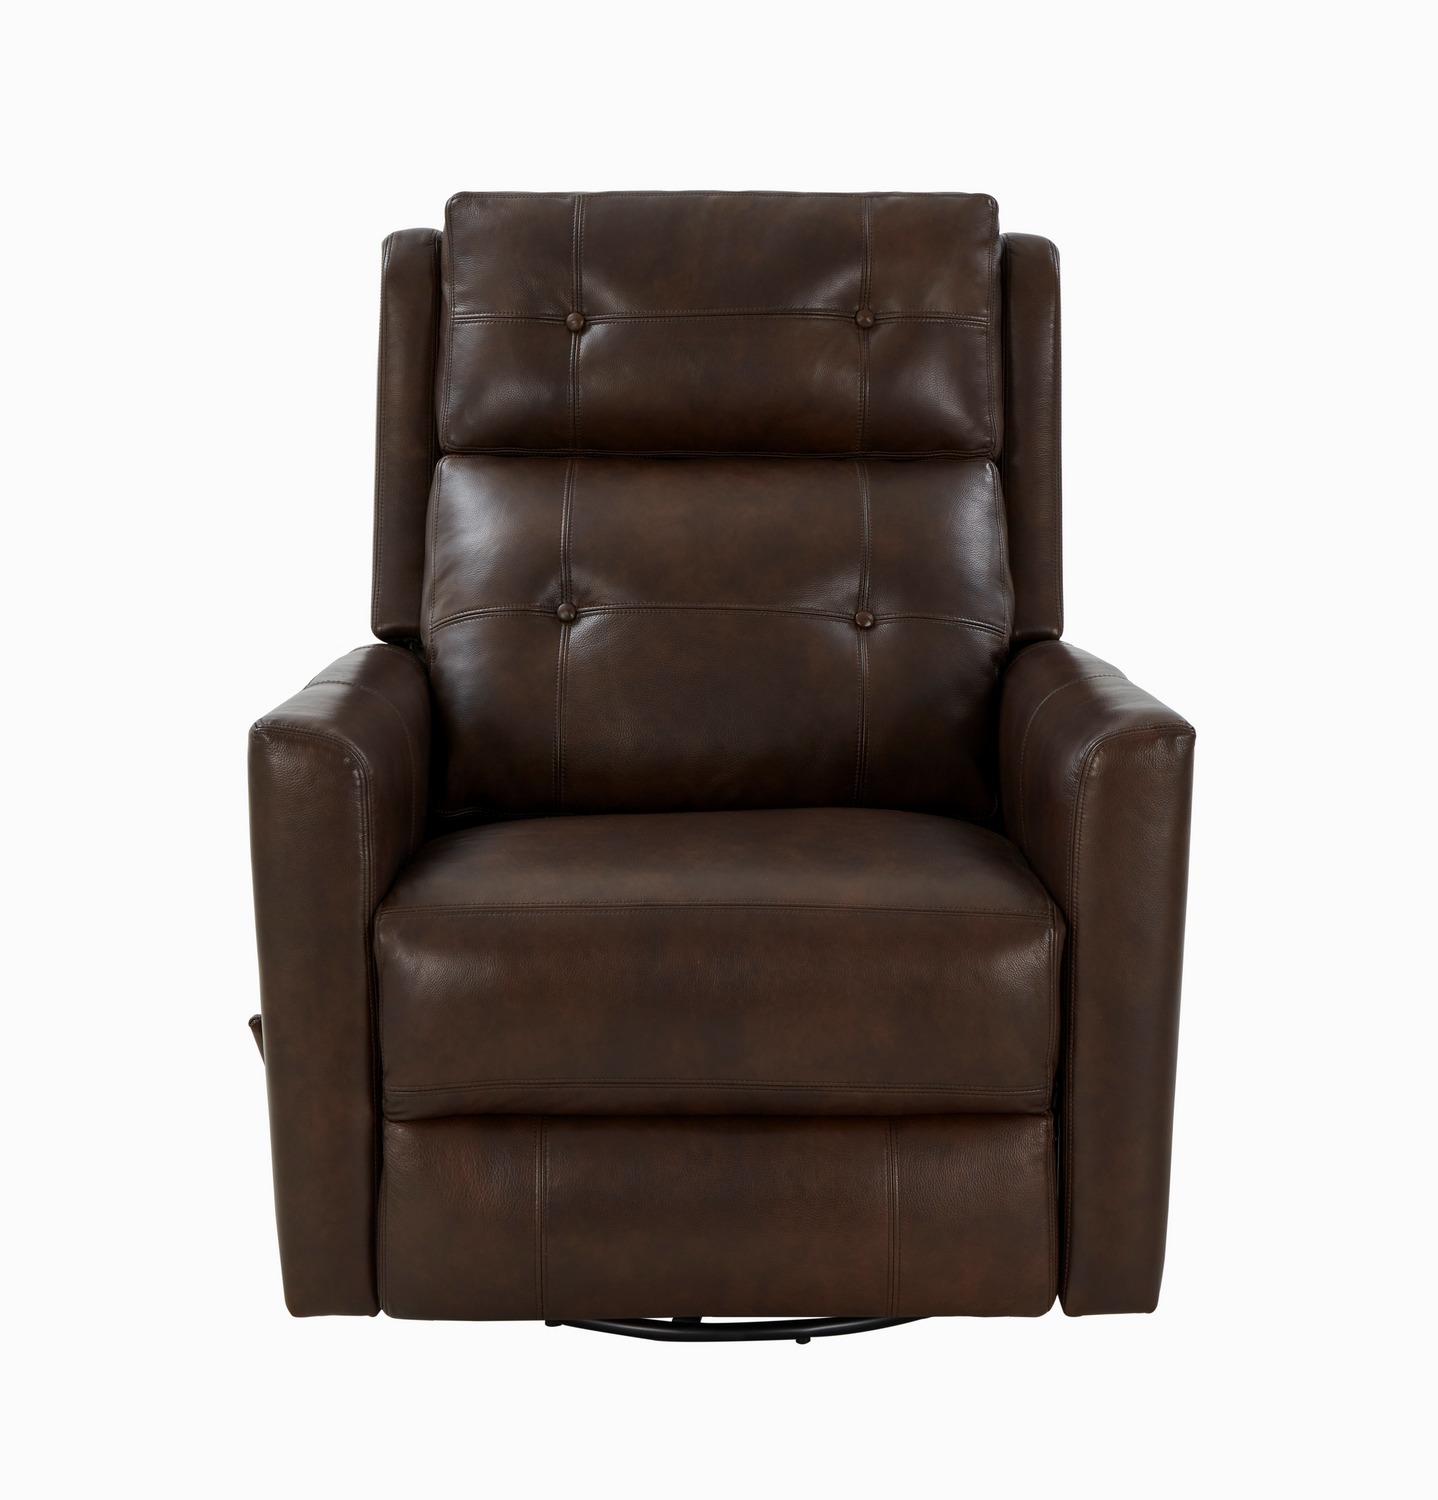 Barcalounger Marconi Swivel Glider Recliner Chair - Ashford Walnut/All Leather